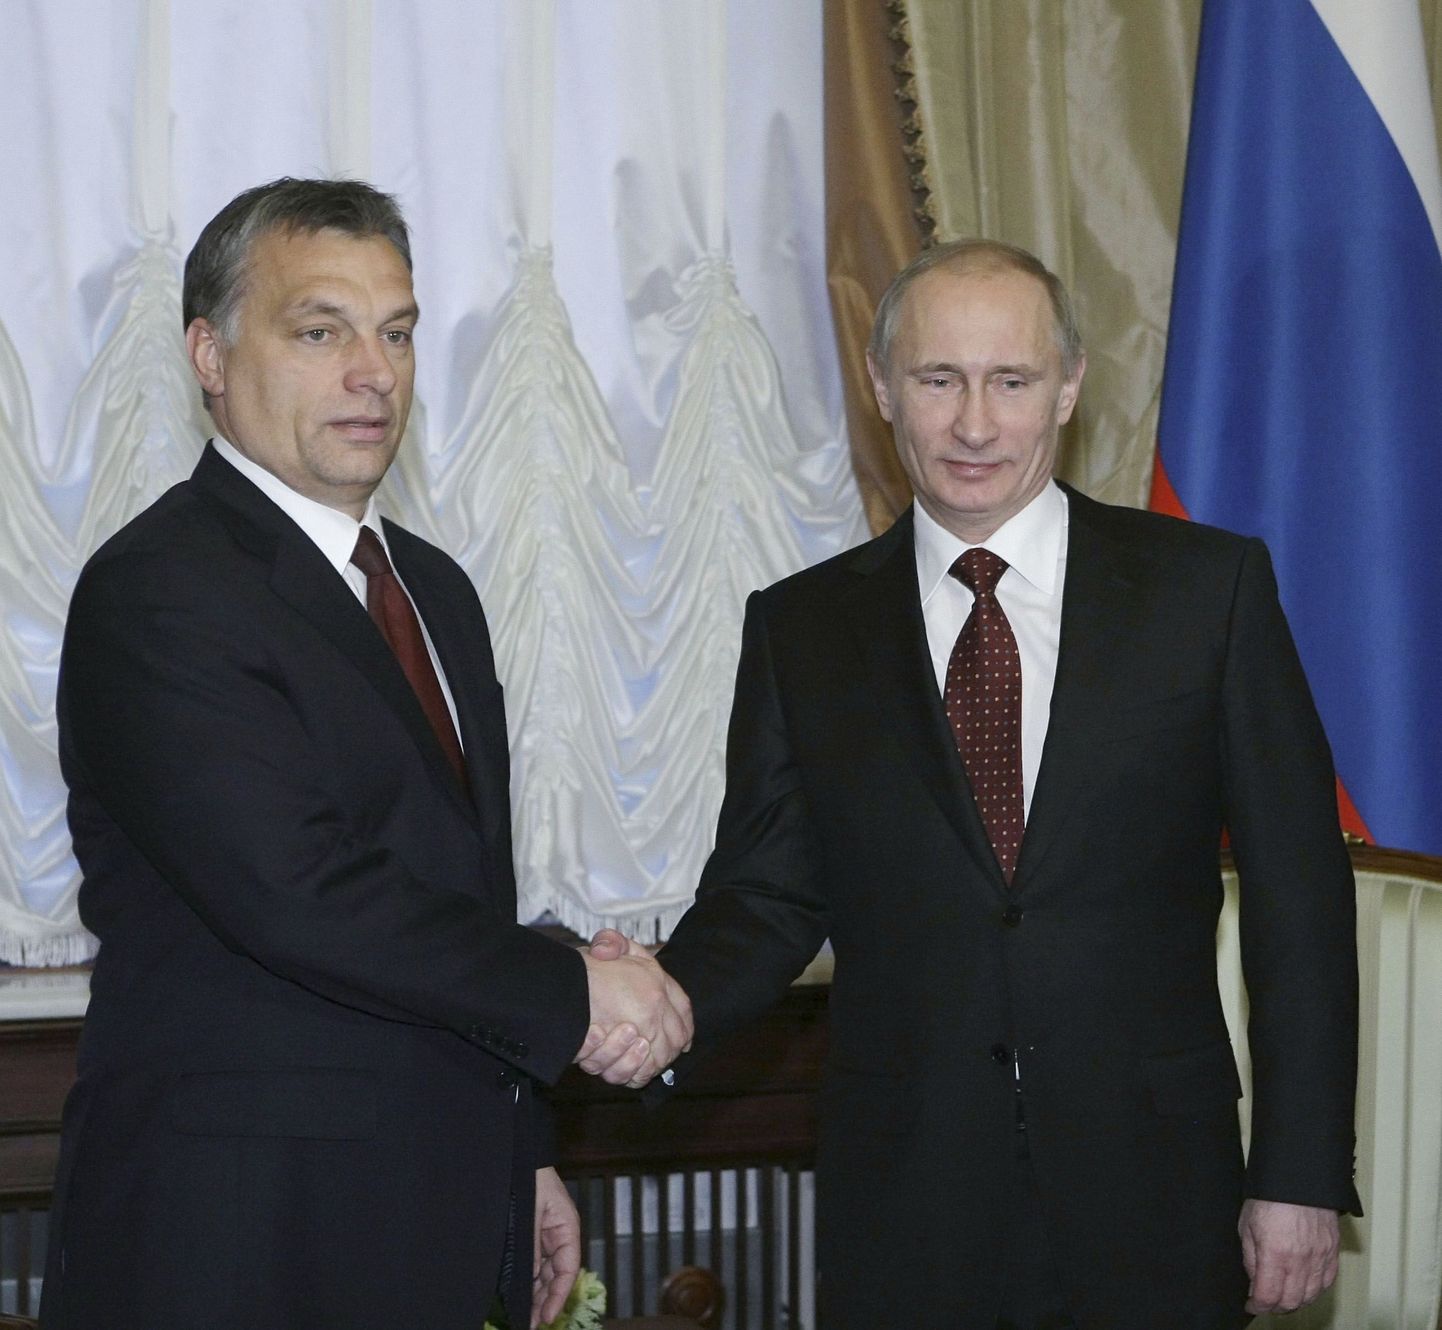 Встреча Владимира Путина (справа) и Виктора Орбана в Москве.